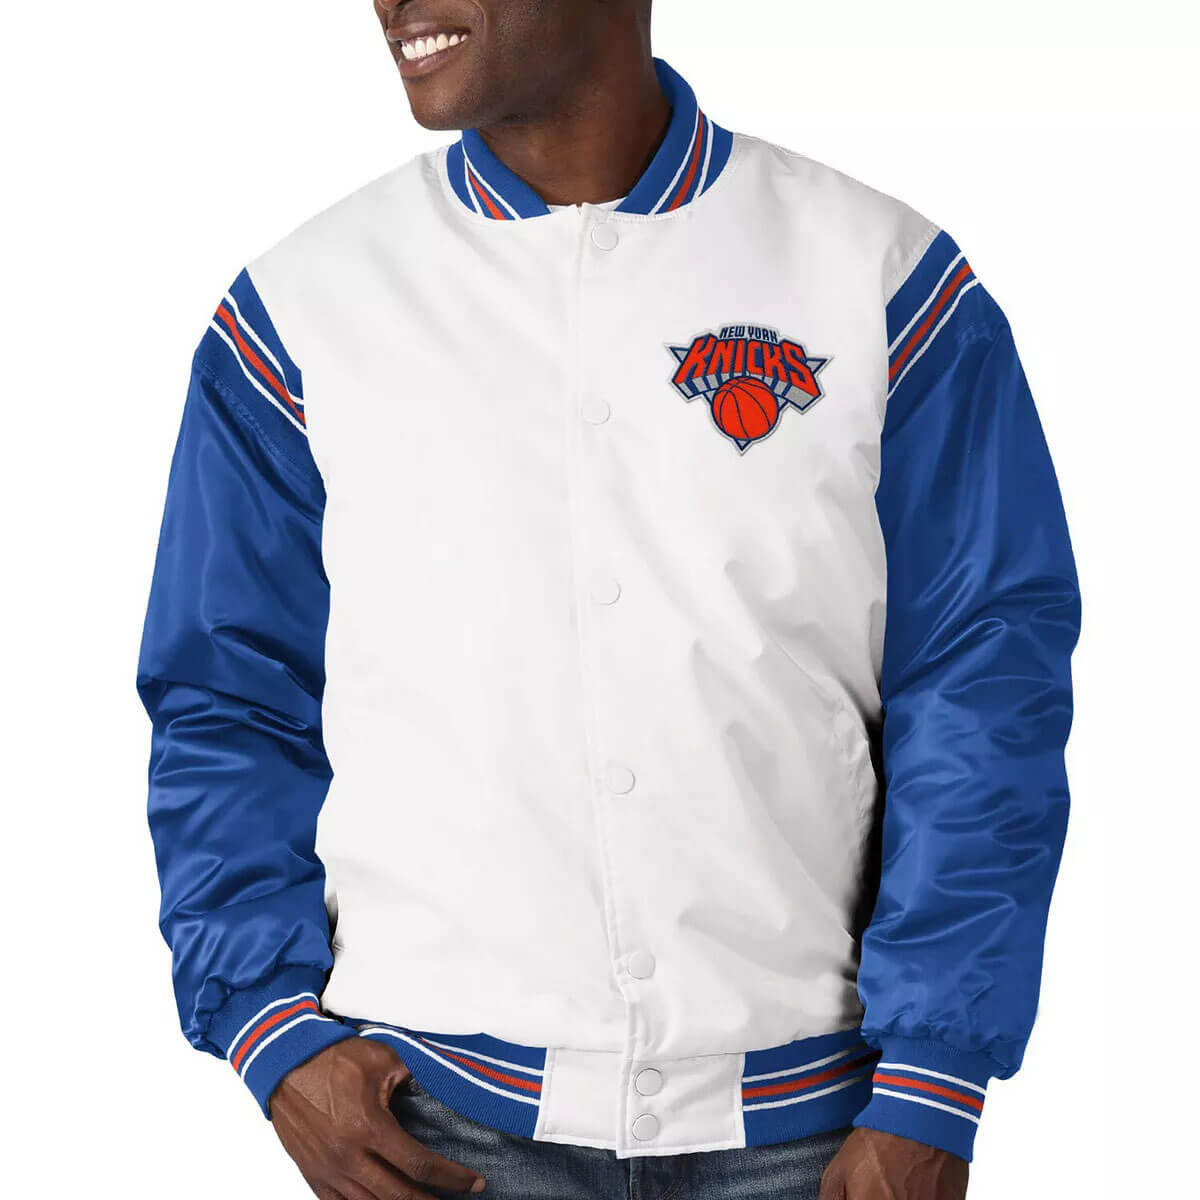 Starter Knicks Captain Varsity Jacket